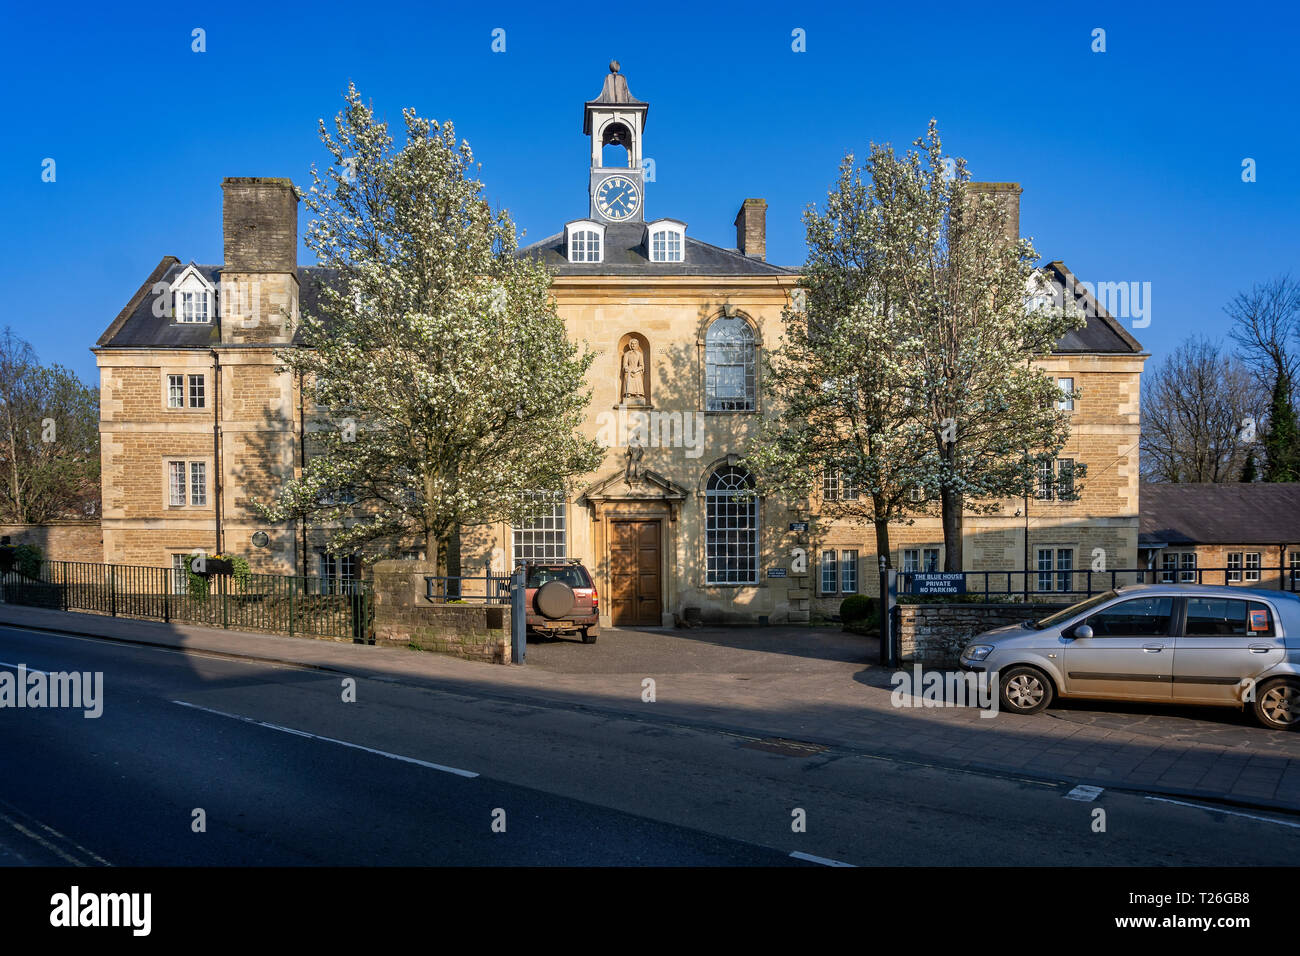 Das Blaue Haus Armenhaus in Frome, Somerset, UK am 29. März 2019 Stockfoto